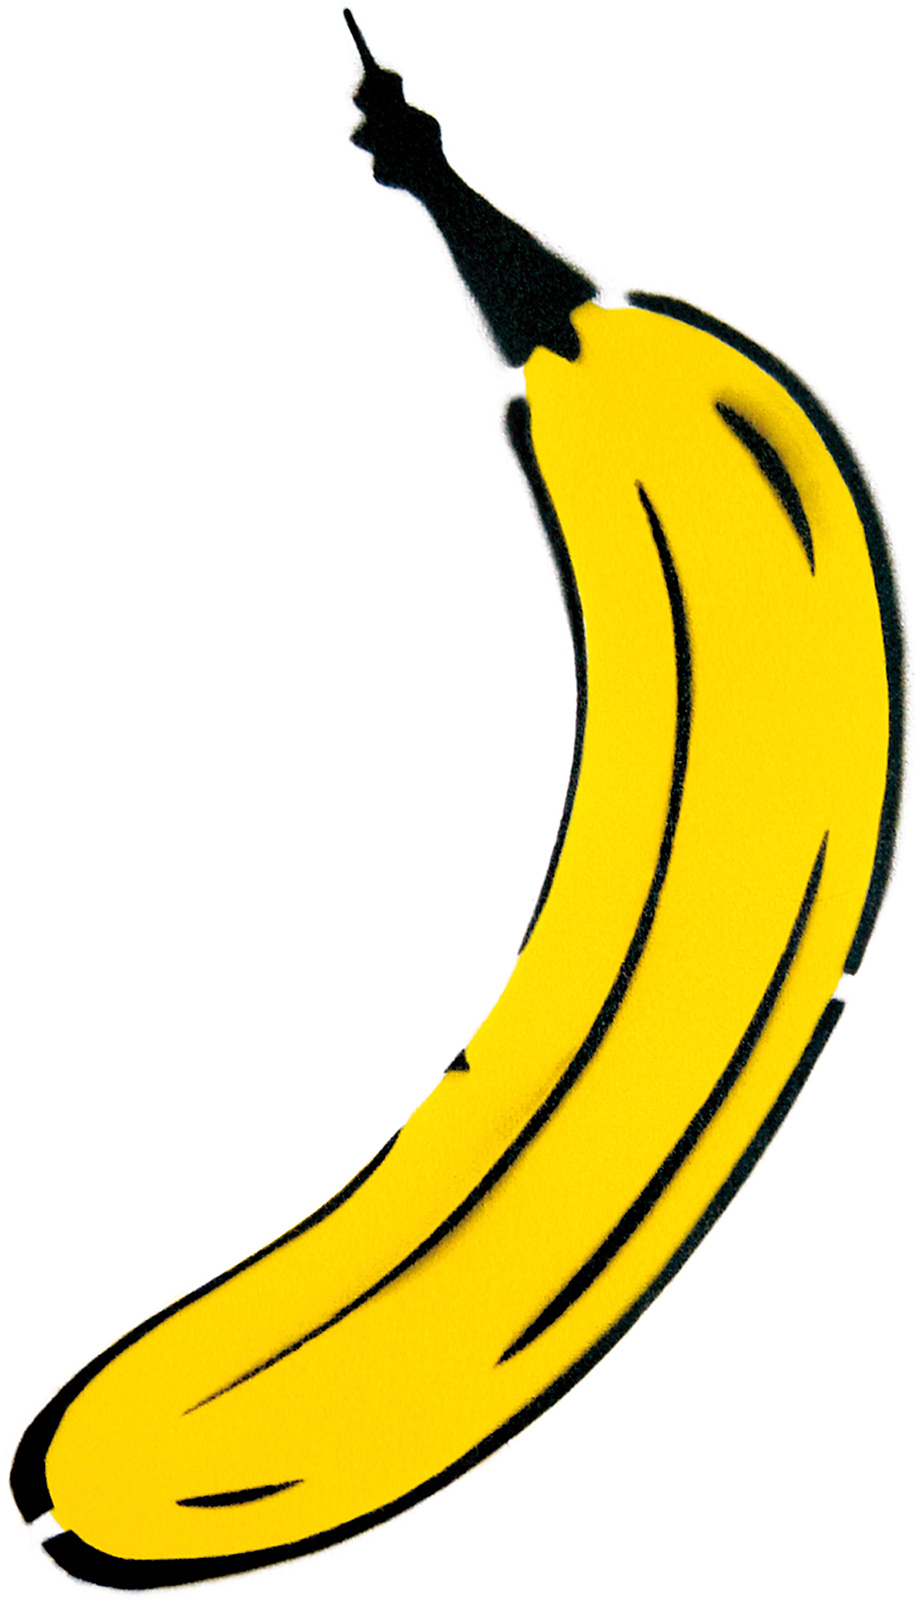 Wandobjekt "Cut Out Banane" von Thomas Baumgärtel